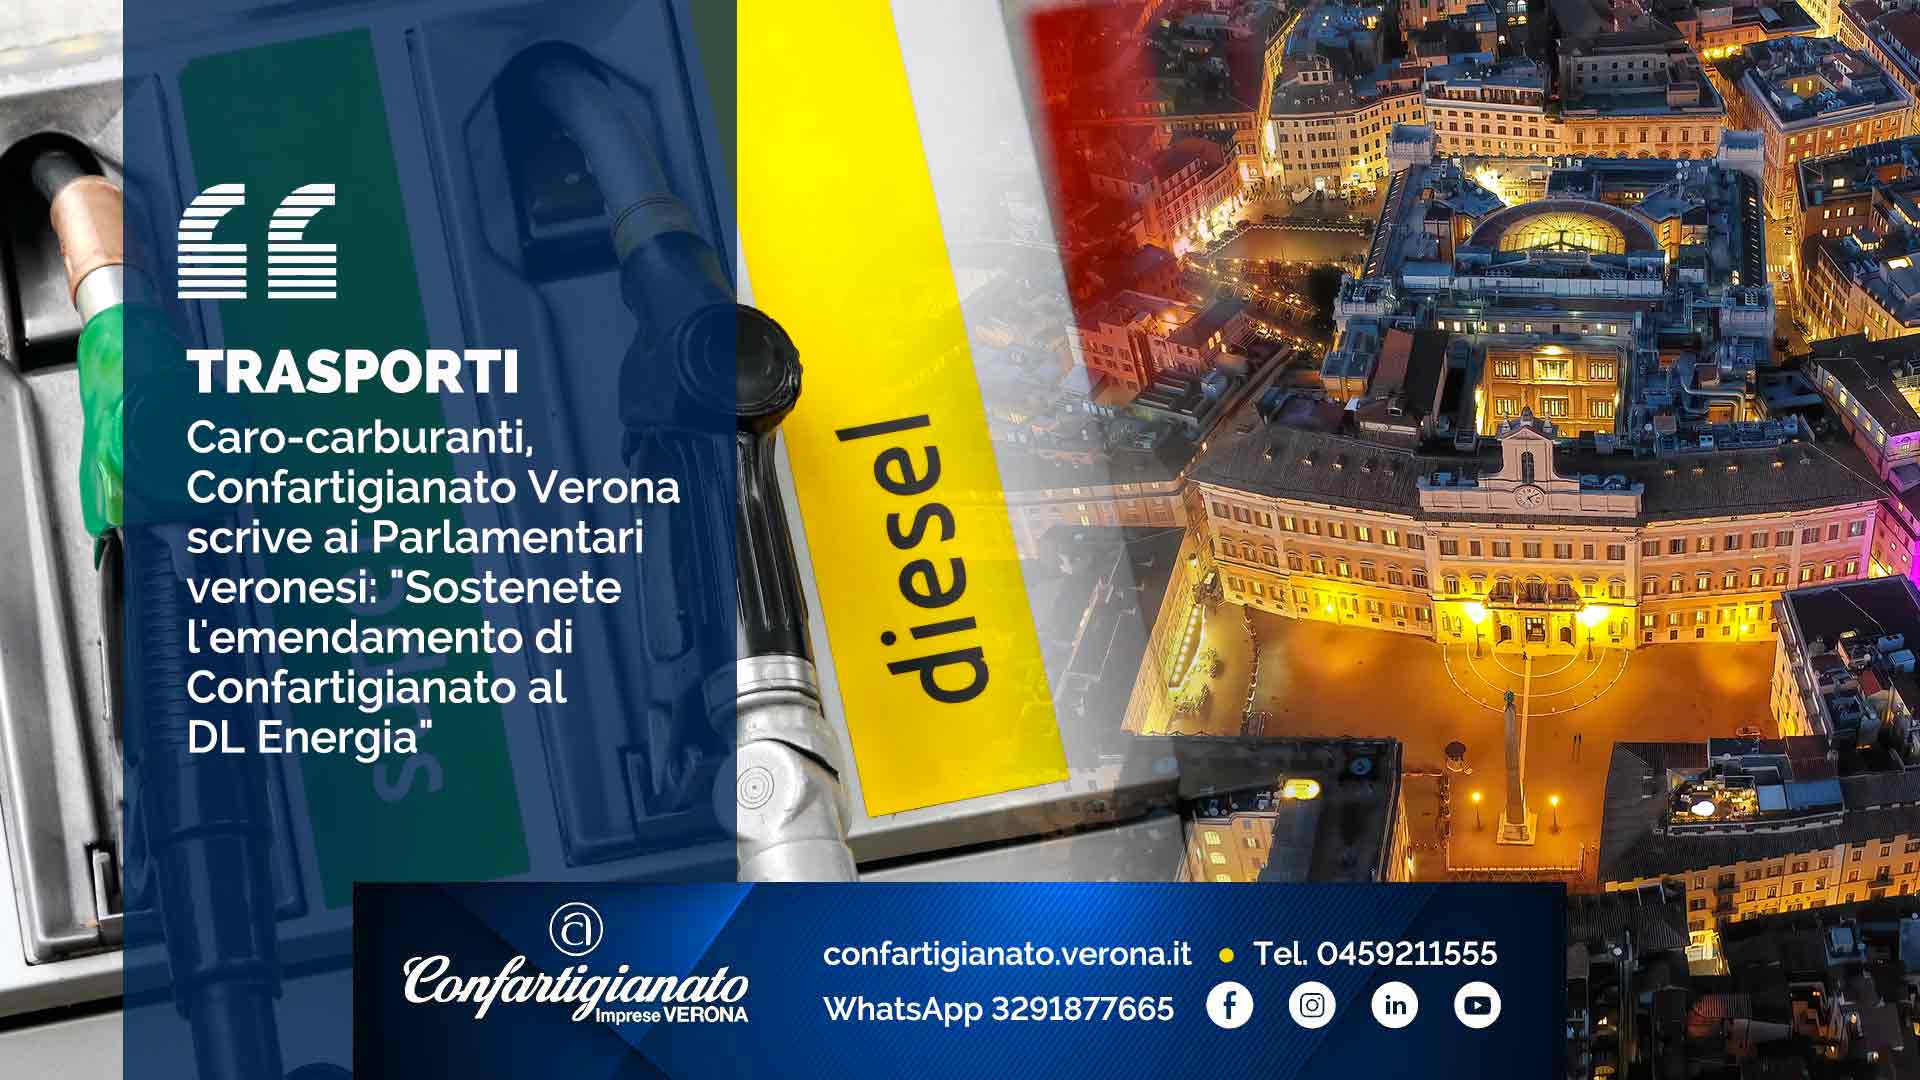 TRASPORTI – Caro-carburanti, Confartigianato Verona scrive ai Parlamentari veronesi: "Sostenete l'emendamento di Confartigianato al DL Energia"